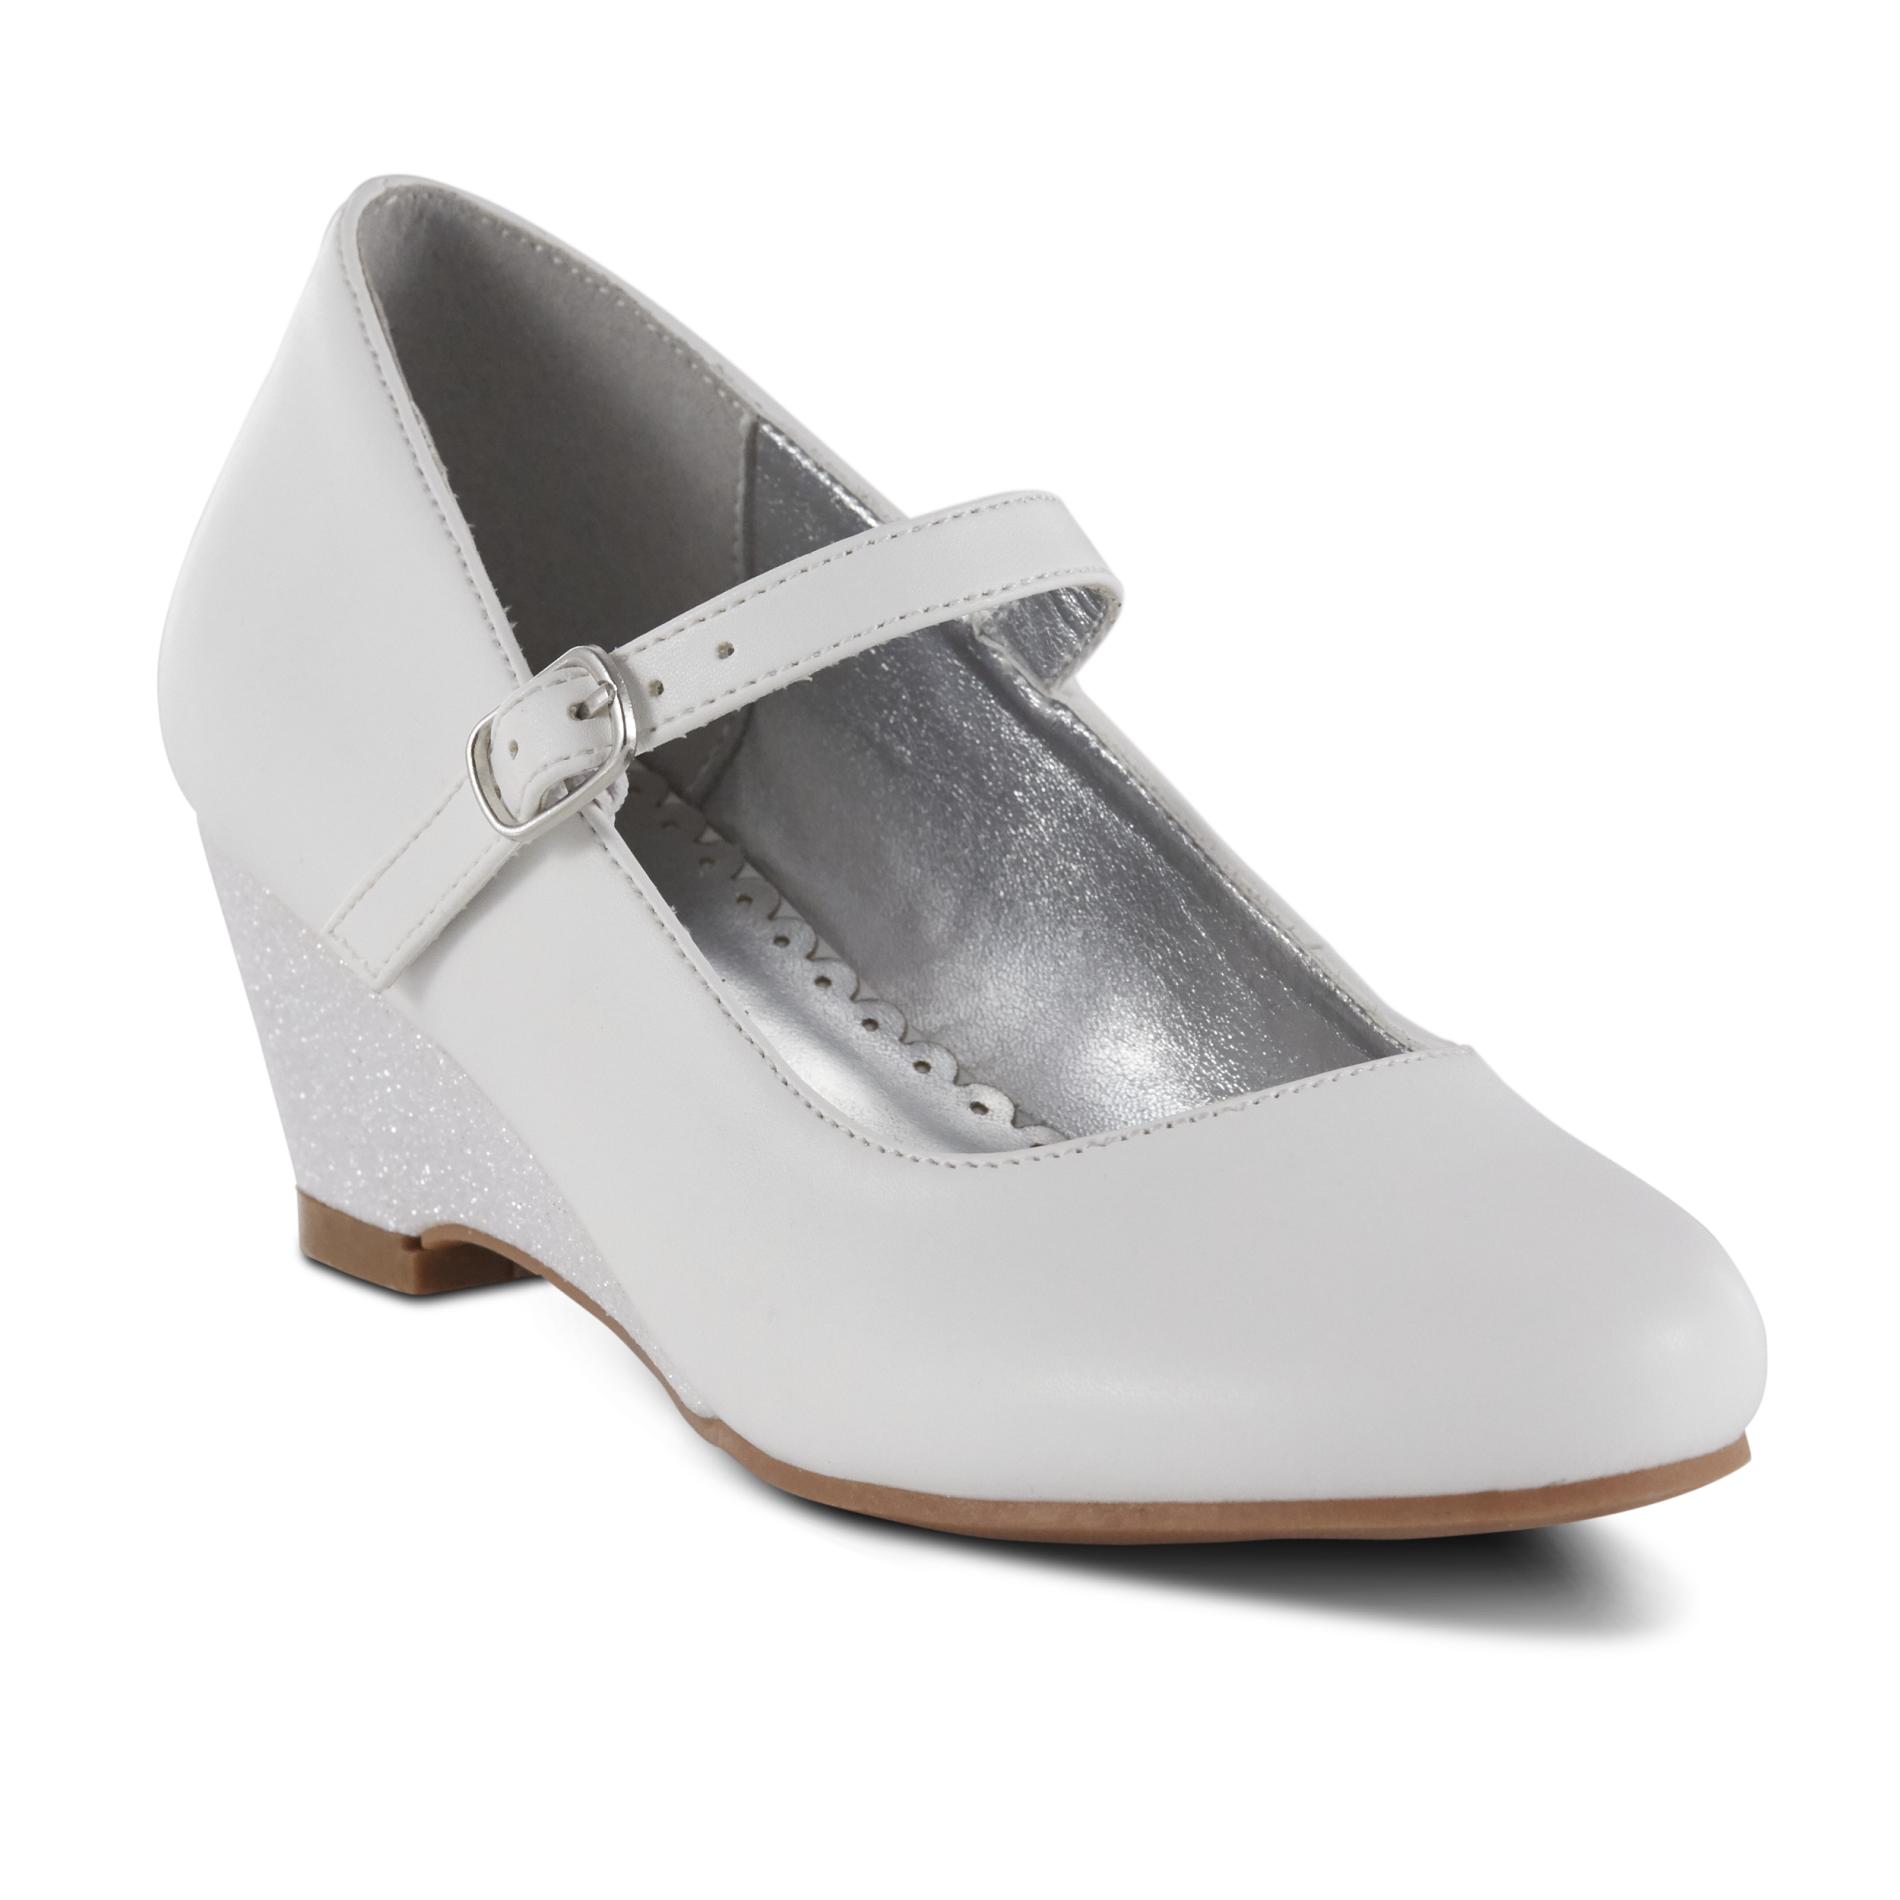 Simply Styled Girls' Jessie Mary Jane Wedge Shoe White